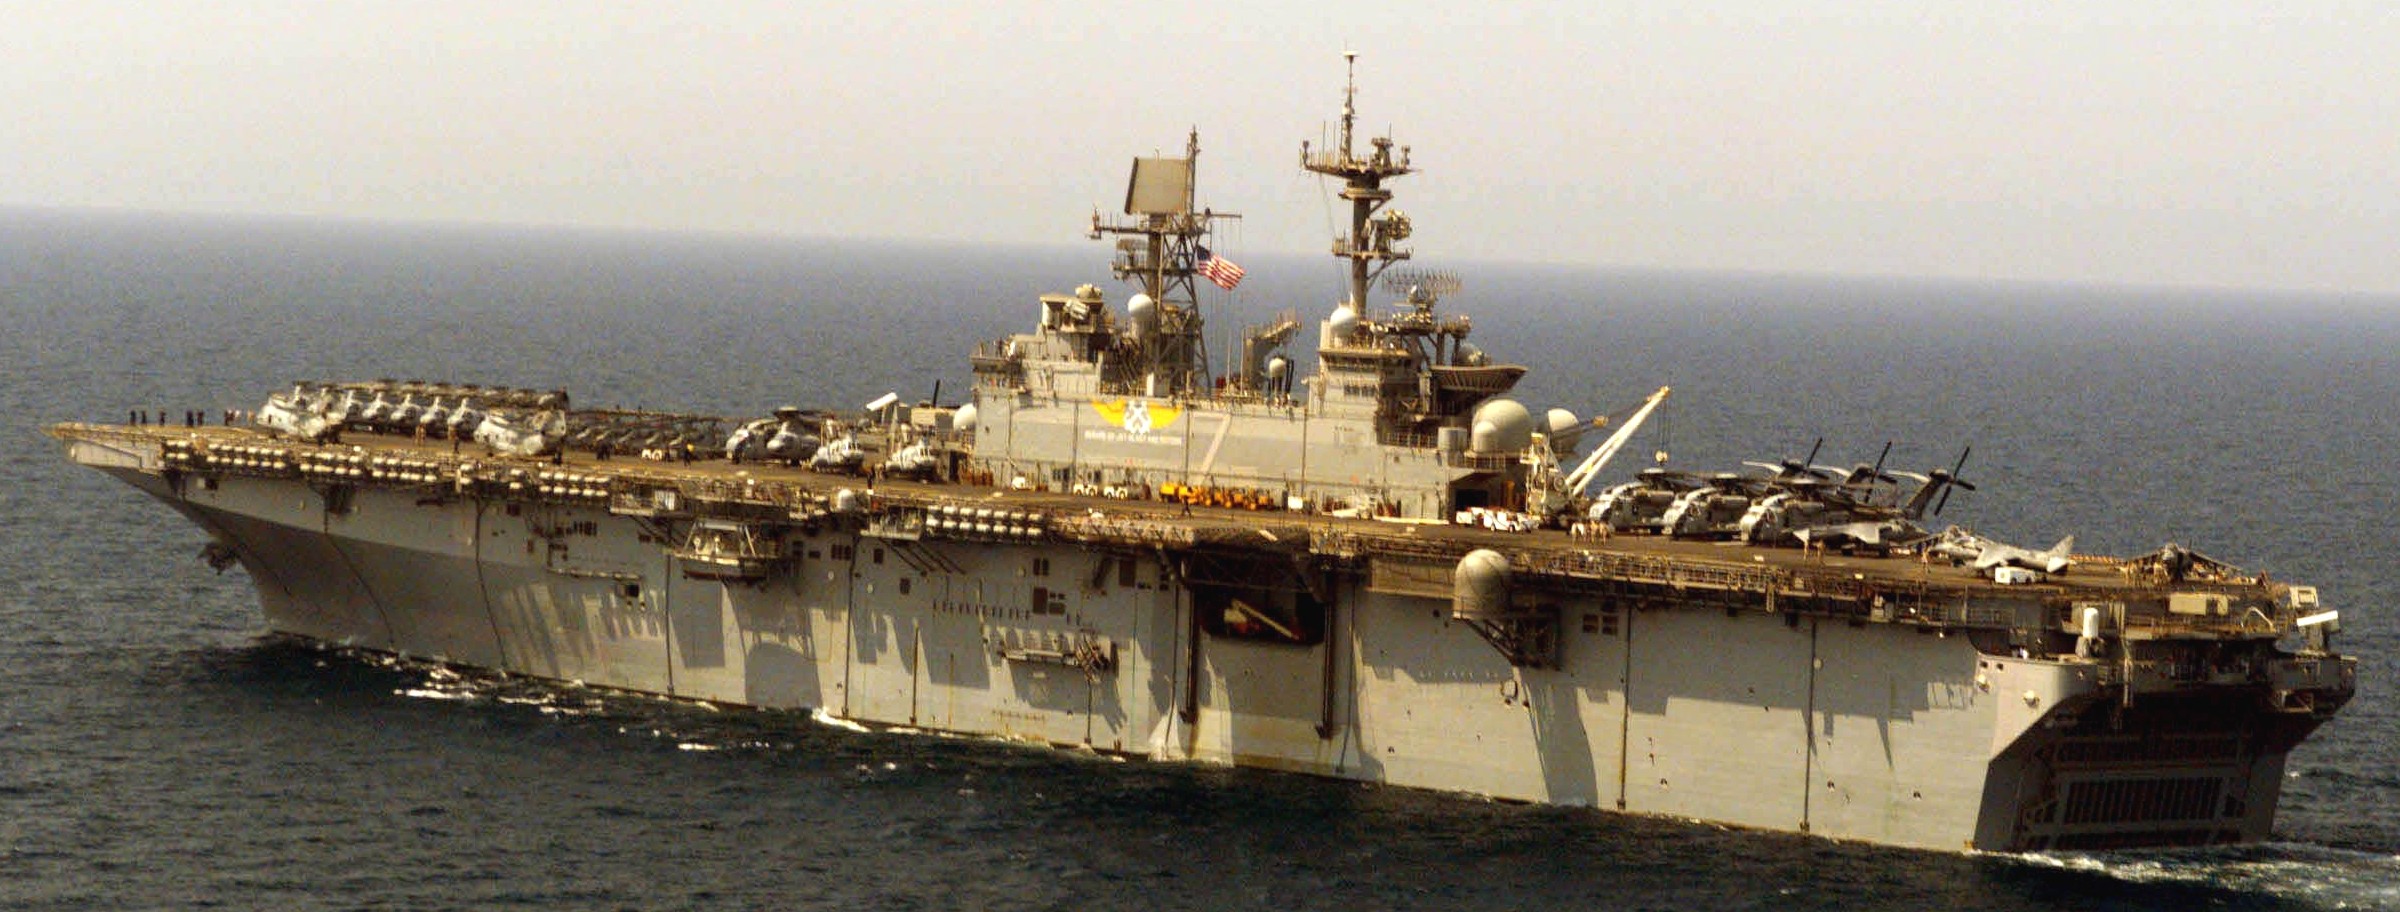 lhd-7 uss iwo jima wasp class amphibious assault ship dock landing helicopter us navy hmm-264 marines 15